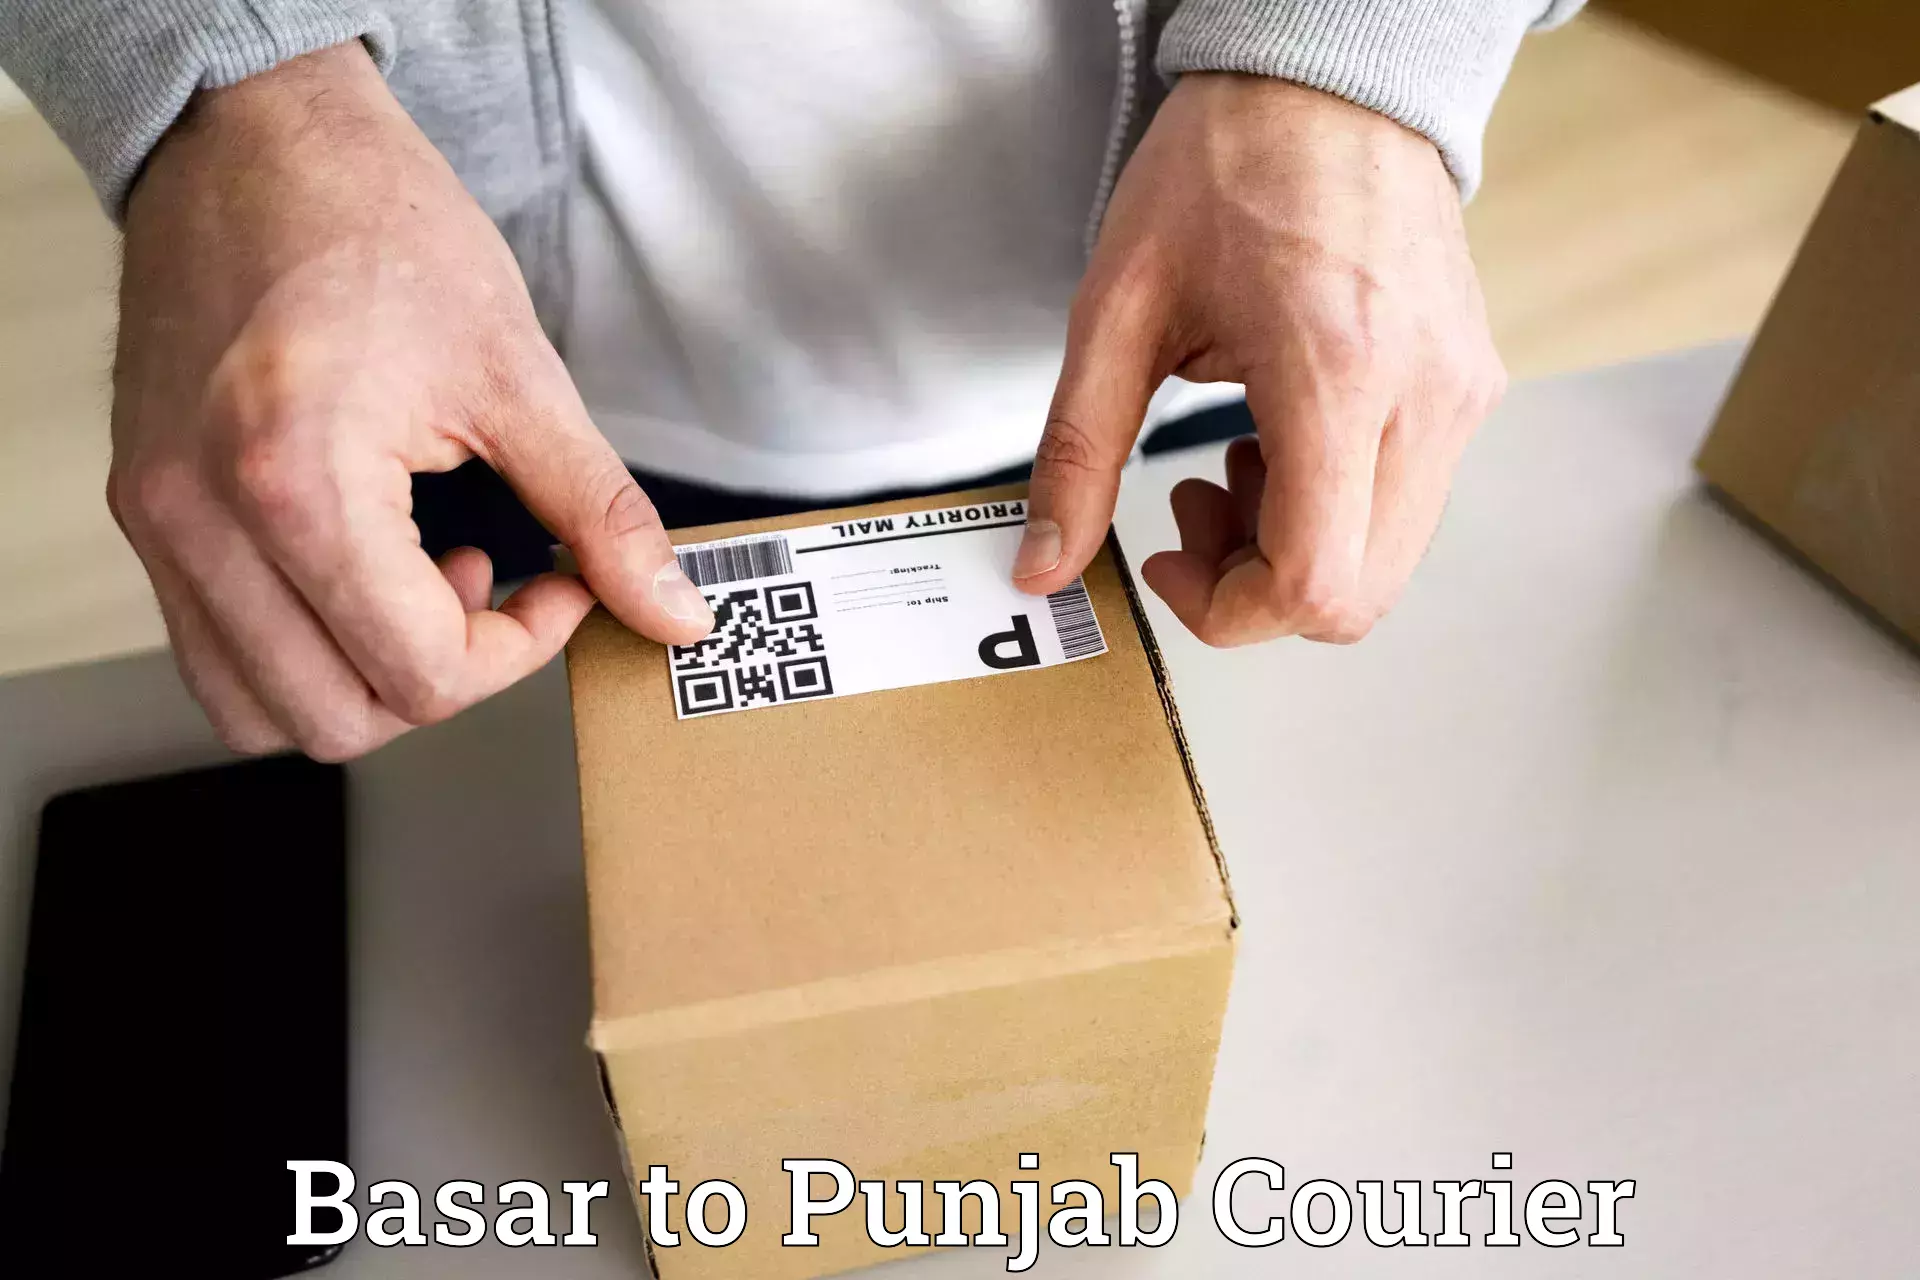 Global shipping solutions Basar to Punjab